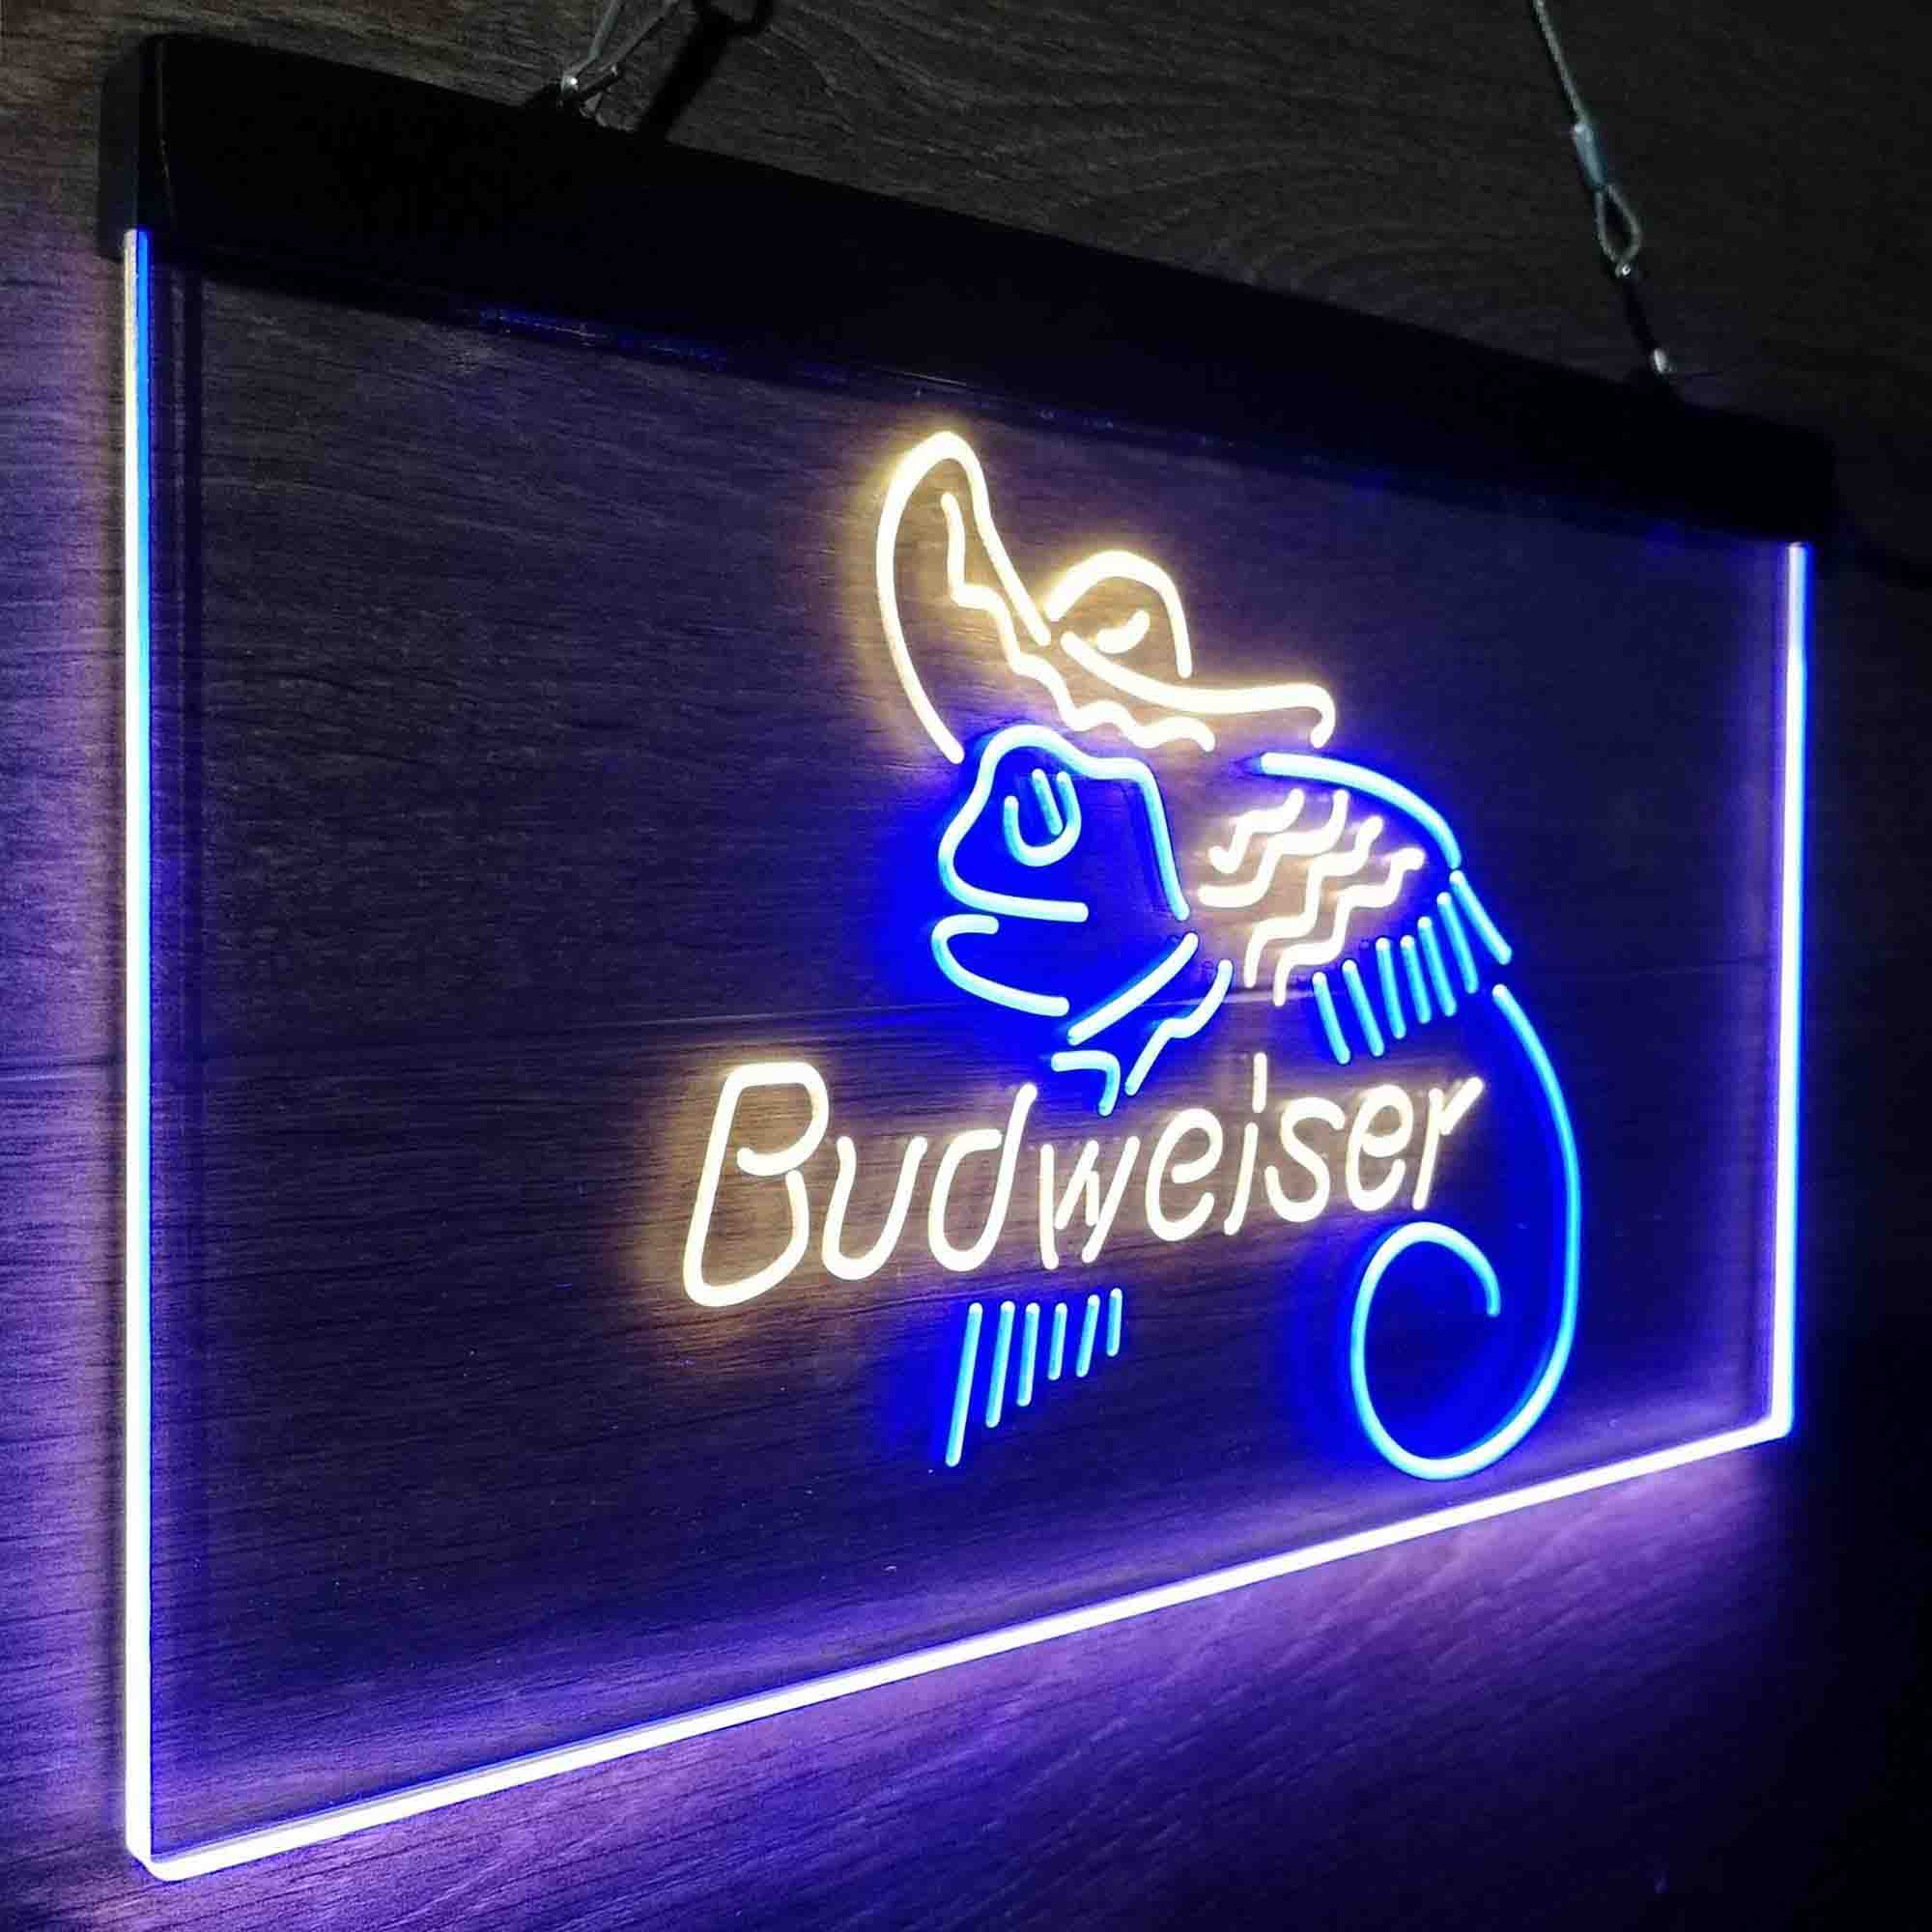 Budweiser Lizard Cowboys Mexico LED Neon Sign